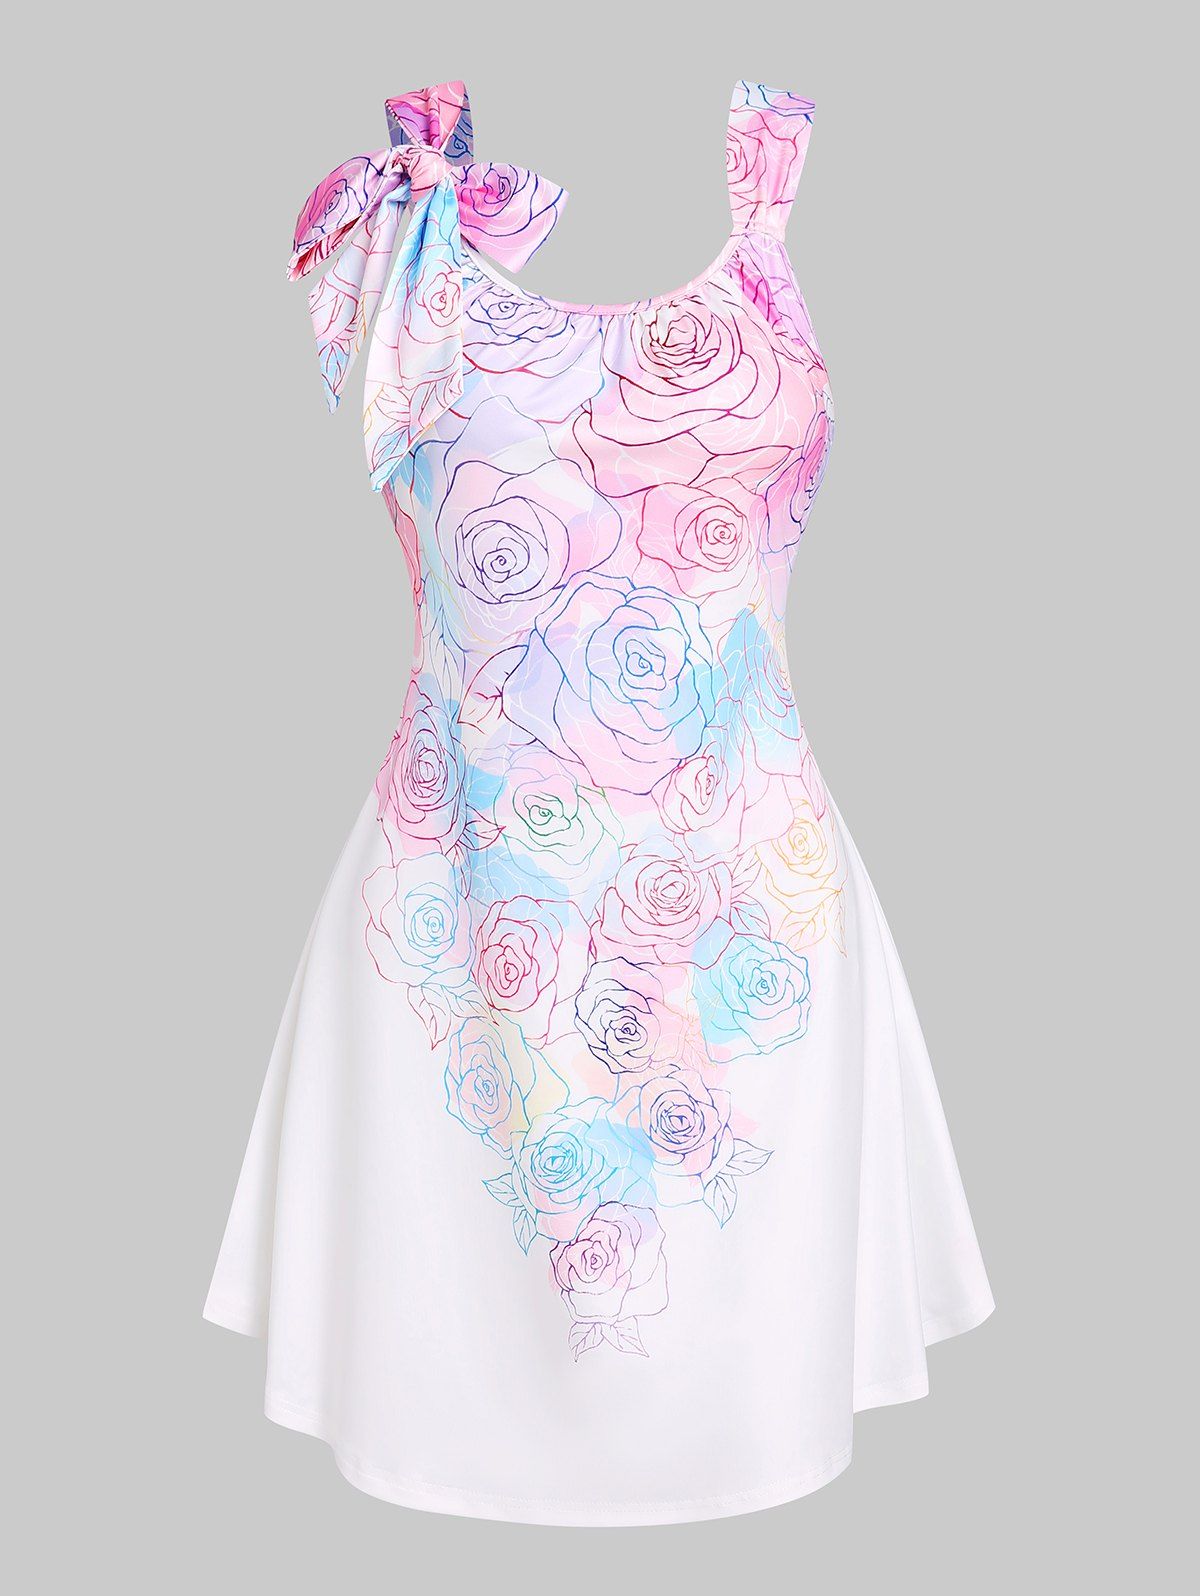 Rose Flower Print Longline Tank Top Pastel Color Bowknot Summer Top - WHITE XL